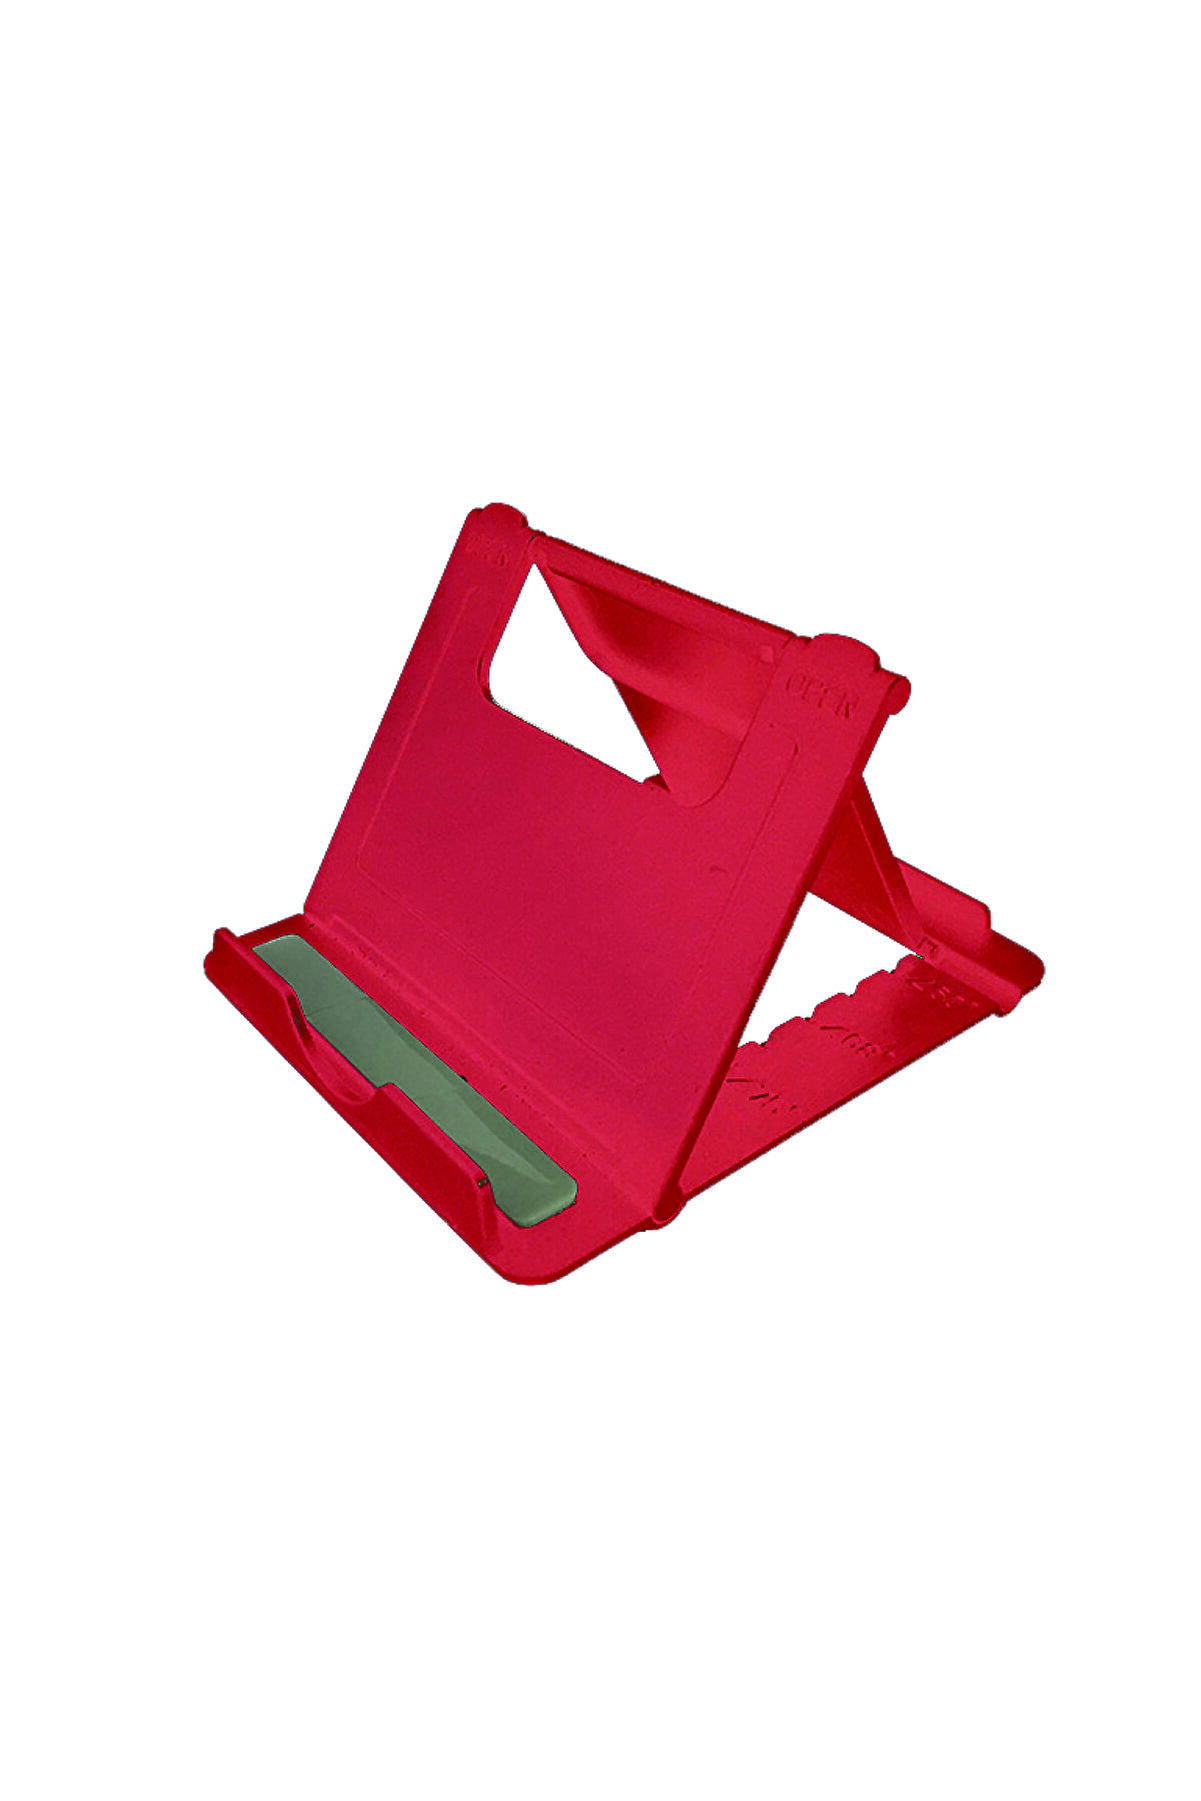 Deilmi Universal Telefon Ve Tablet Stand Tutucu Foldstand Kırmızı